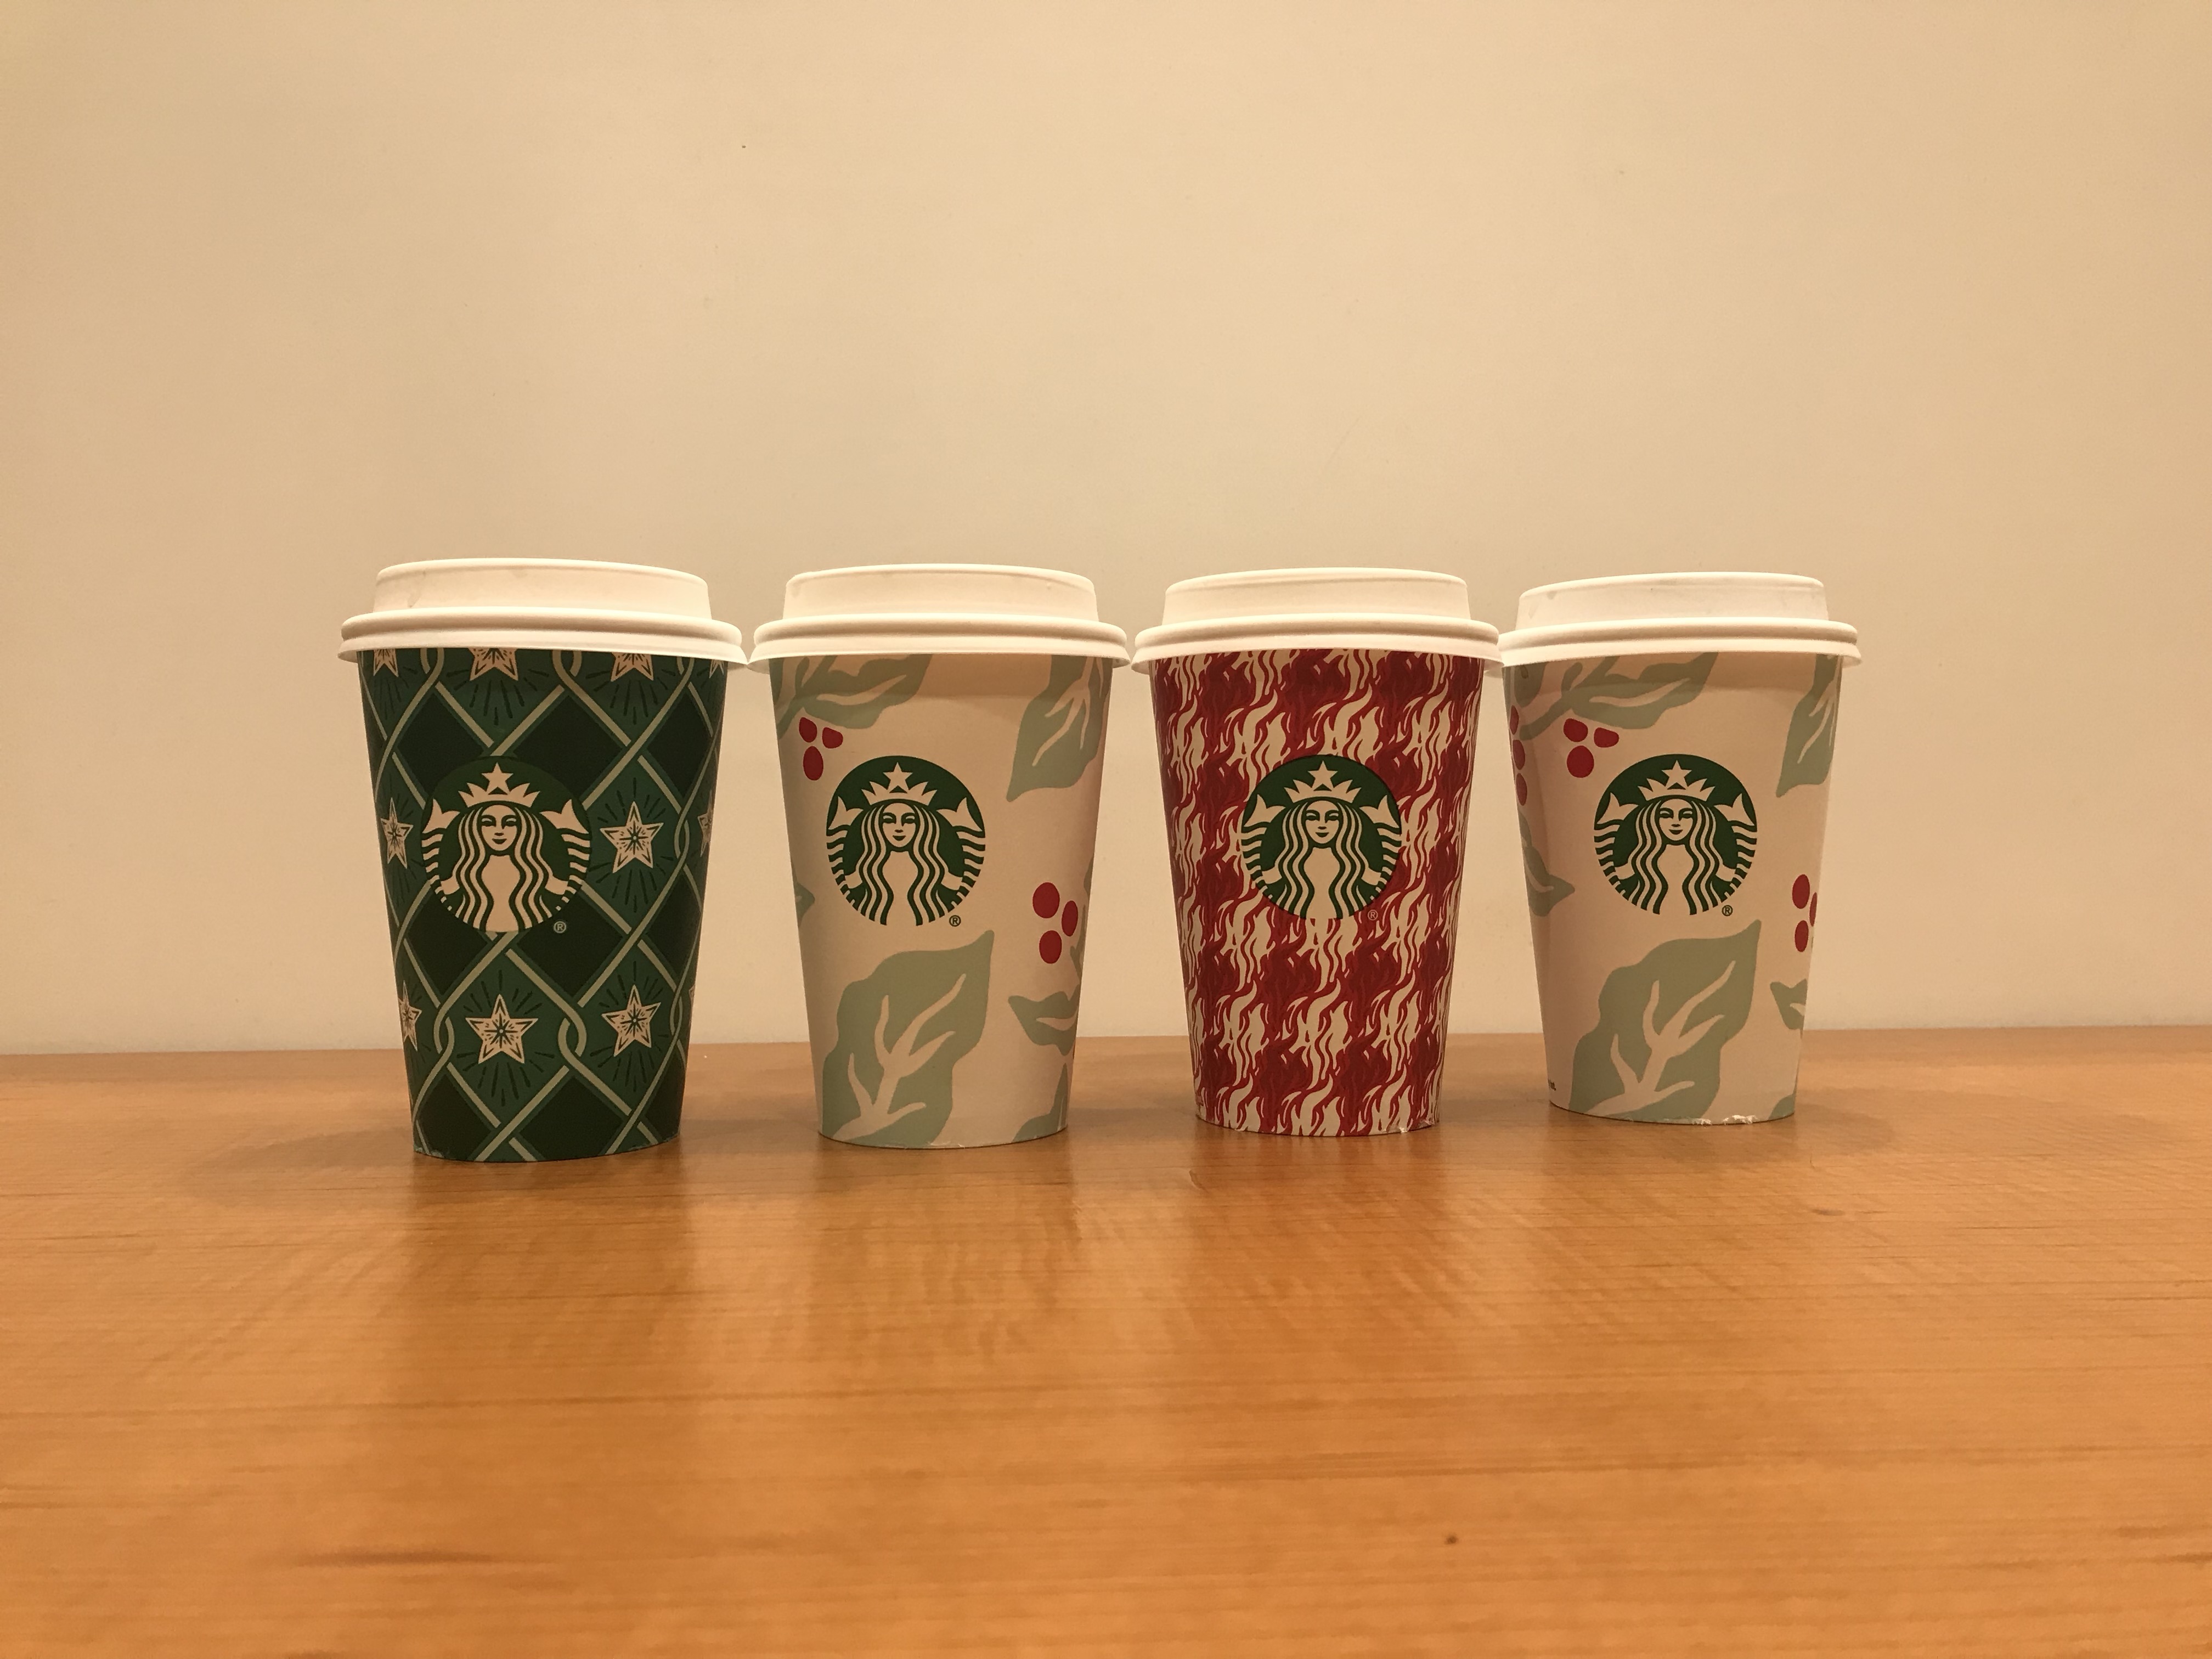 Dashing into the holiday season with festive Starbucks drinks